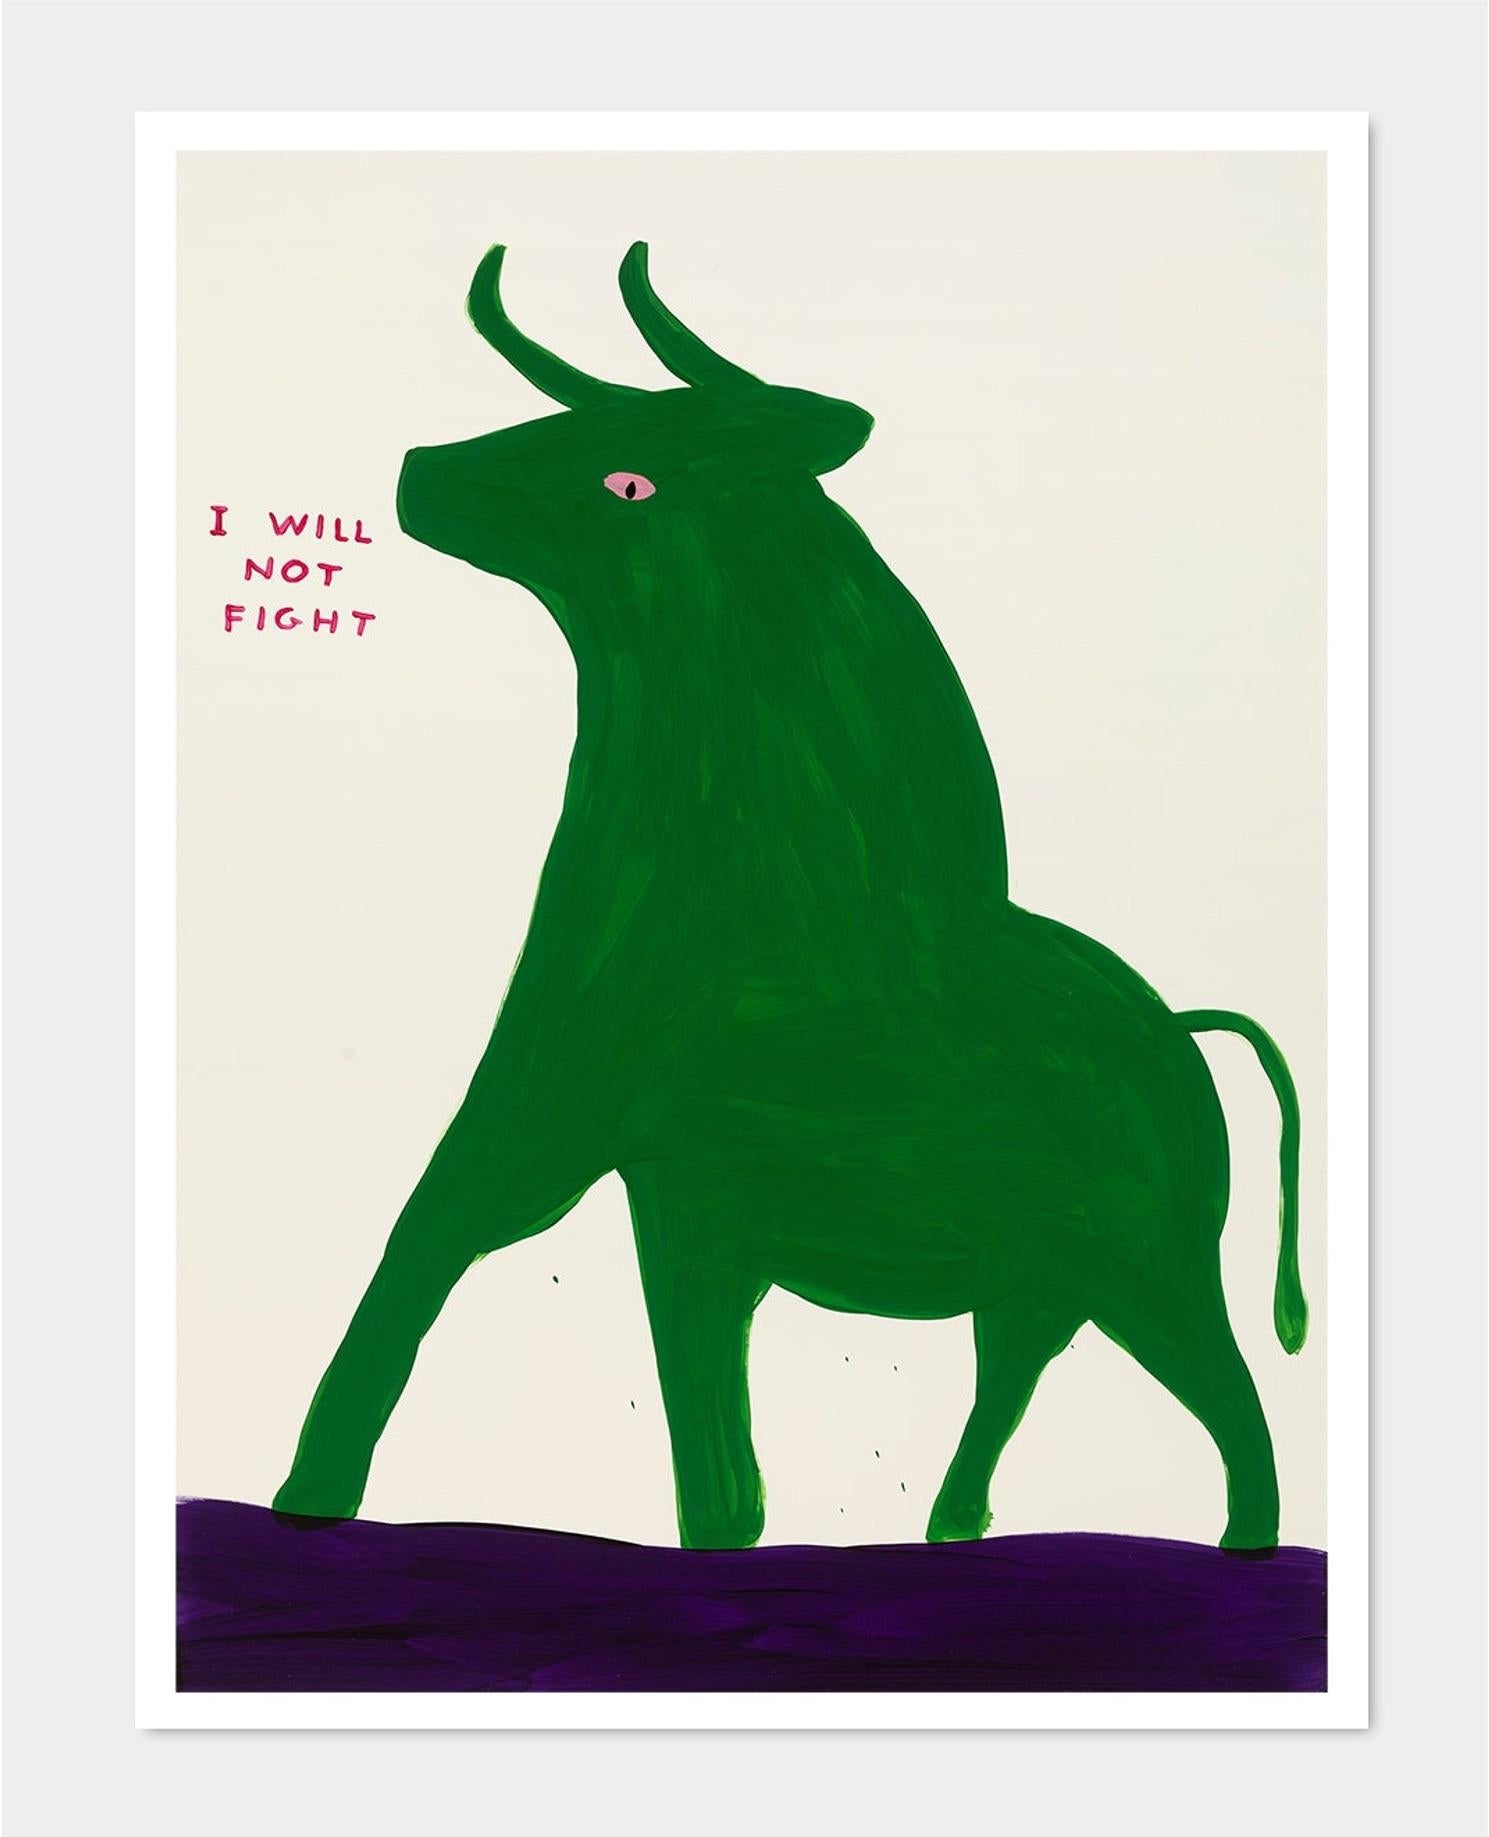 David Shrigley
Untitled (I Will Not Fight) (2019)
80 x 60 cm
Offset-Lithographie
Gedruckt auf 200g Munken Lynx Papier